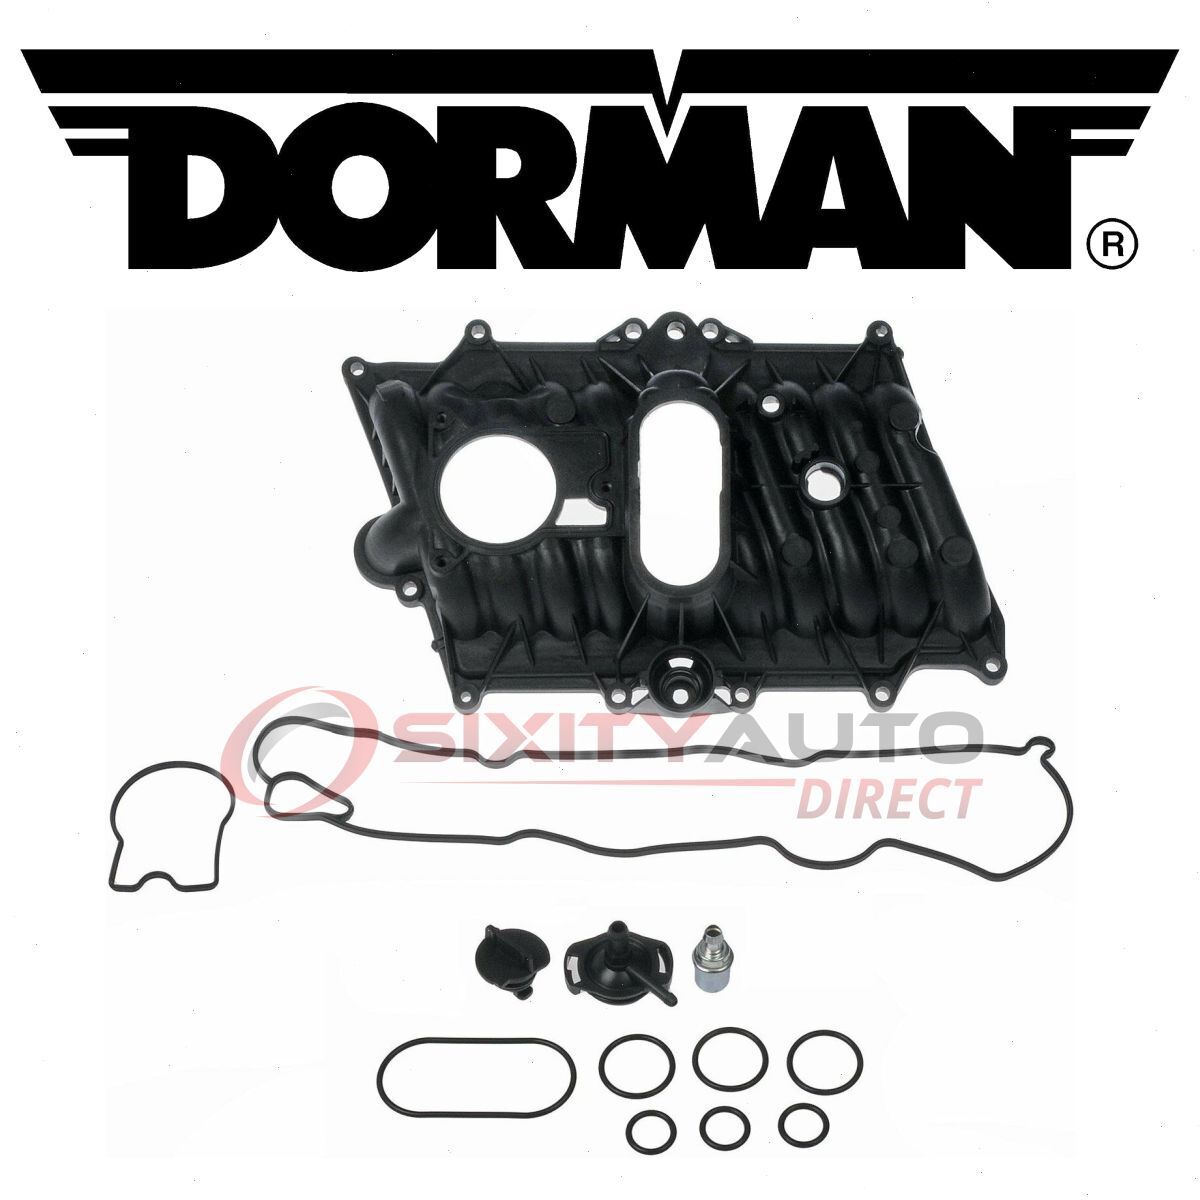 Dorman Upper Engine Intake Manifold for 2000-2001 Workhorse FasTrack FT1260 pw